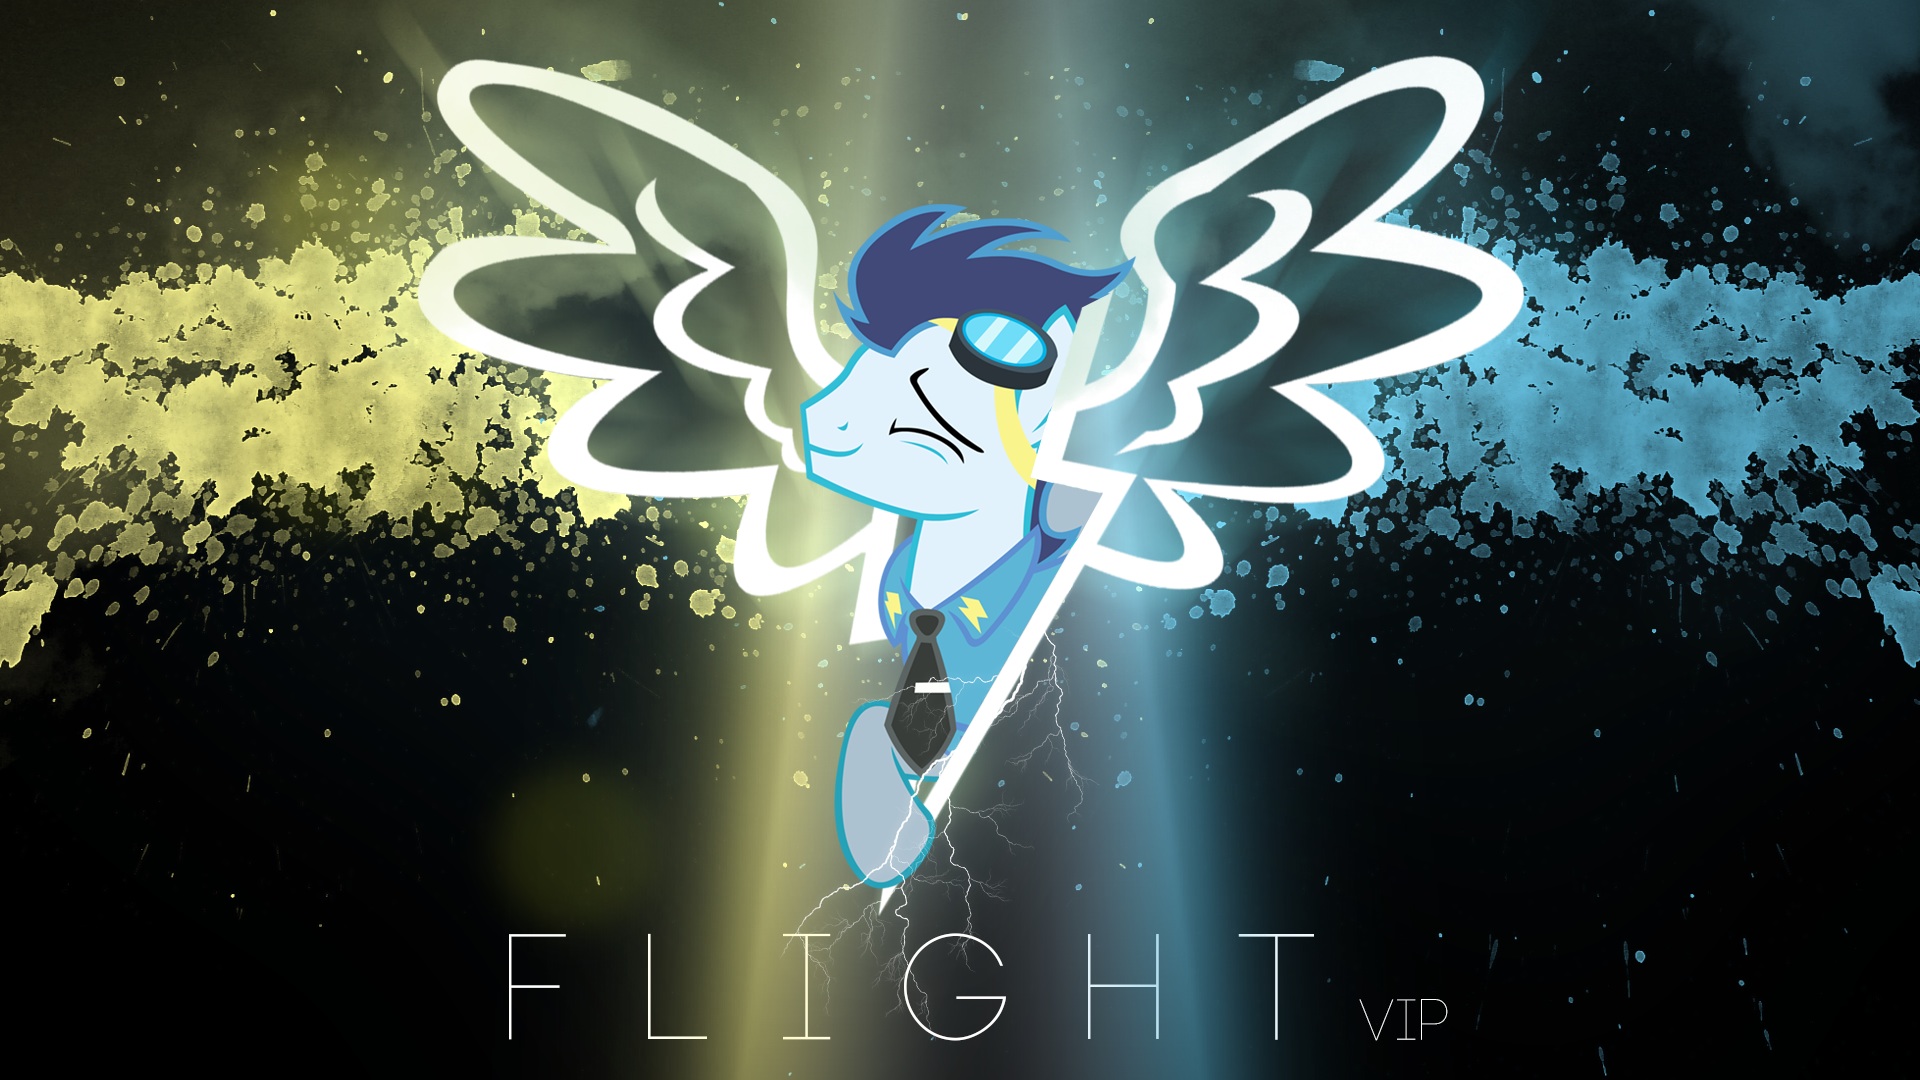 Flight VIP (Soarin') by owlet57